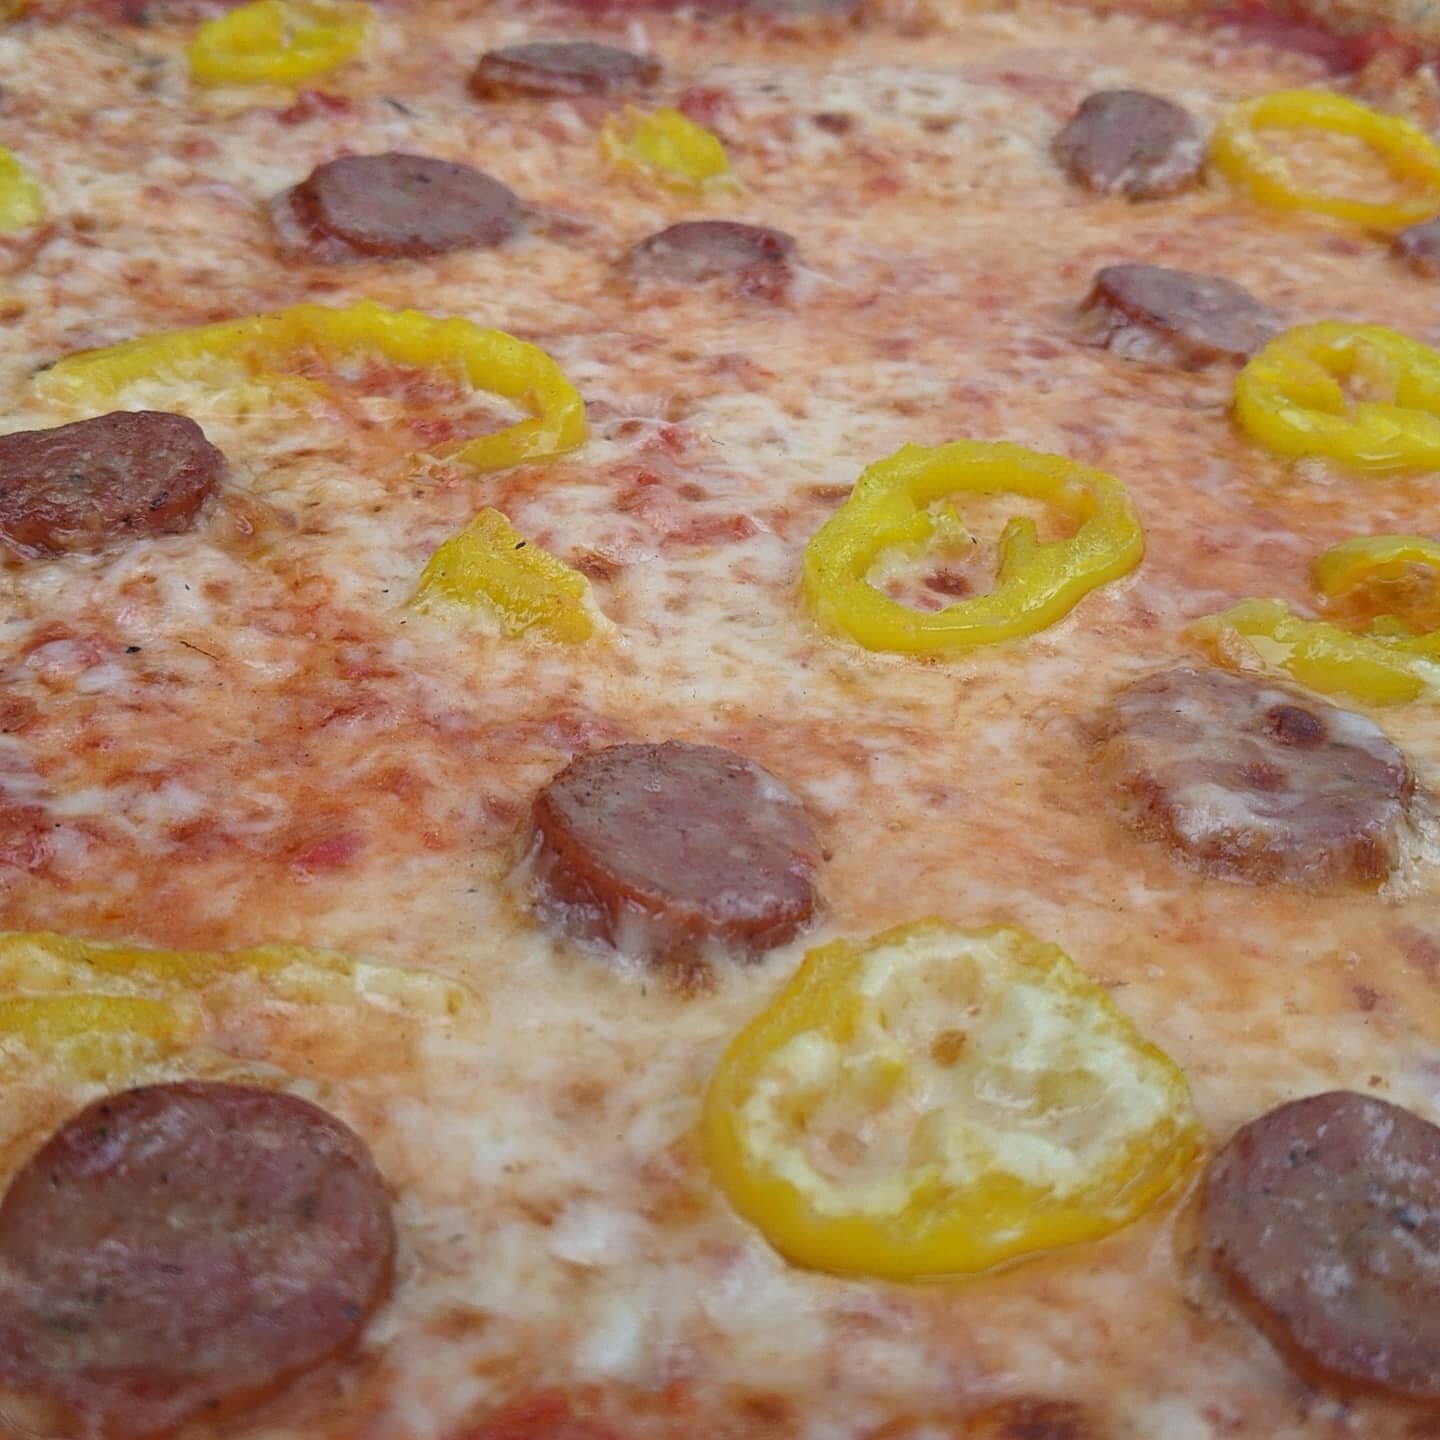 Lil' Smoky!  Artisan Smoked Sausage with Yellow Peppers

#weddingpizza #pizzawedding #centralpaweddings #centralpacaterer